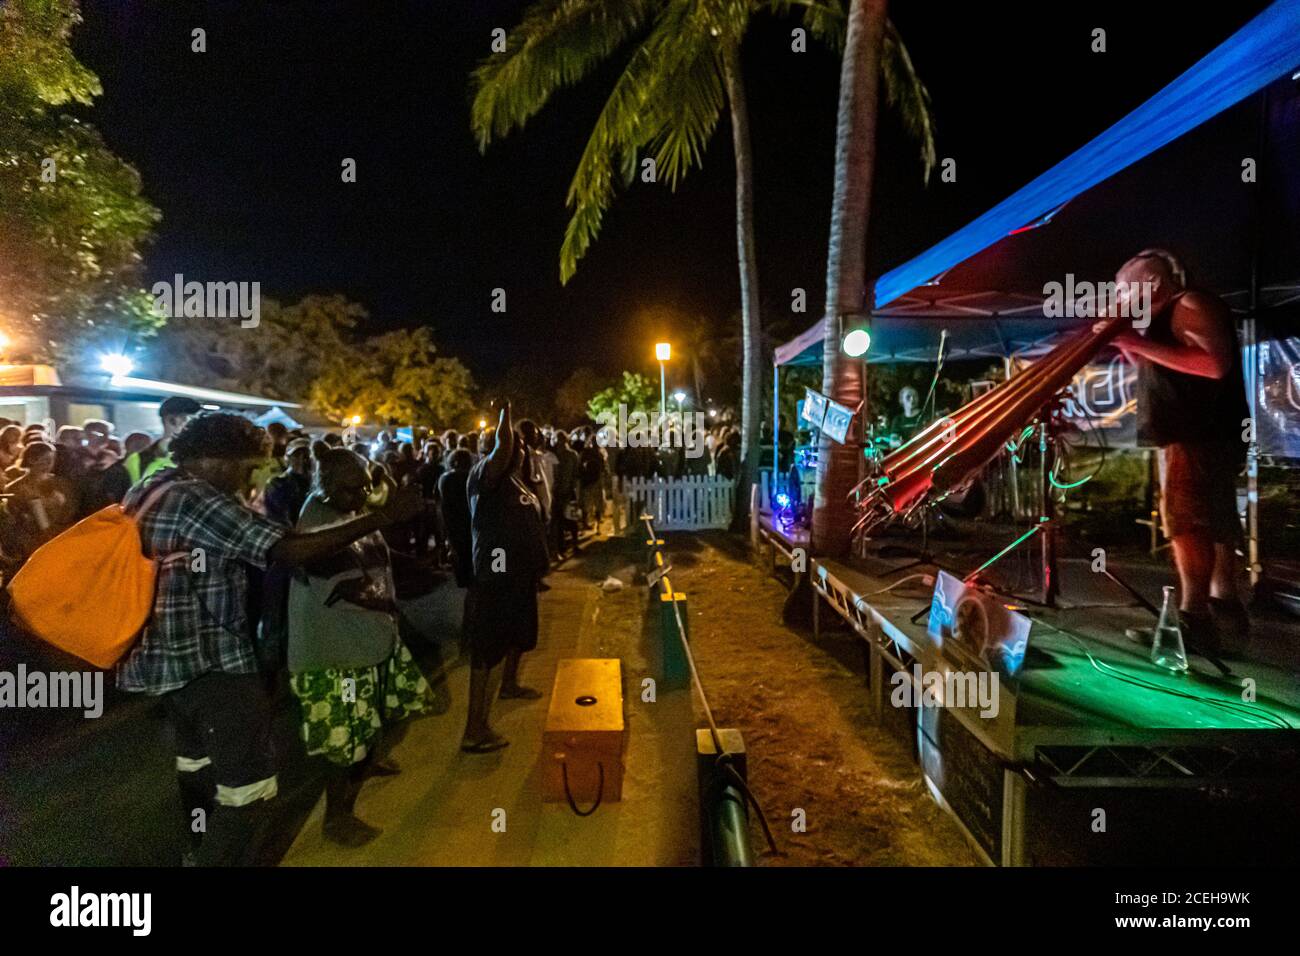 eMDee giving a concert at Mindil Beach Market in Darwin, Australia Stock Photo